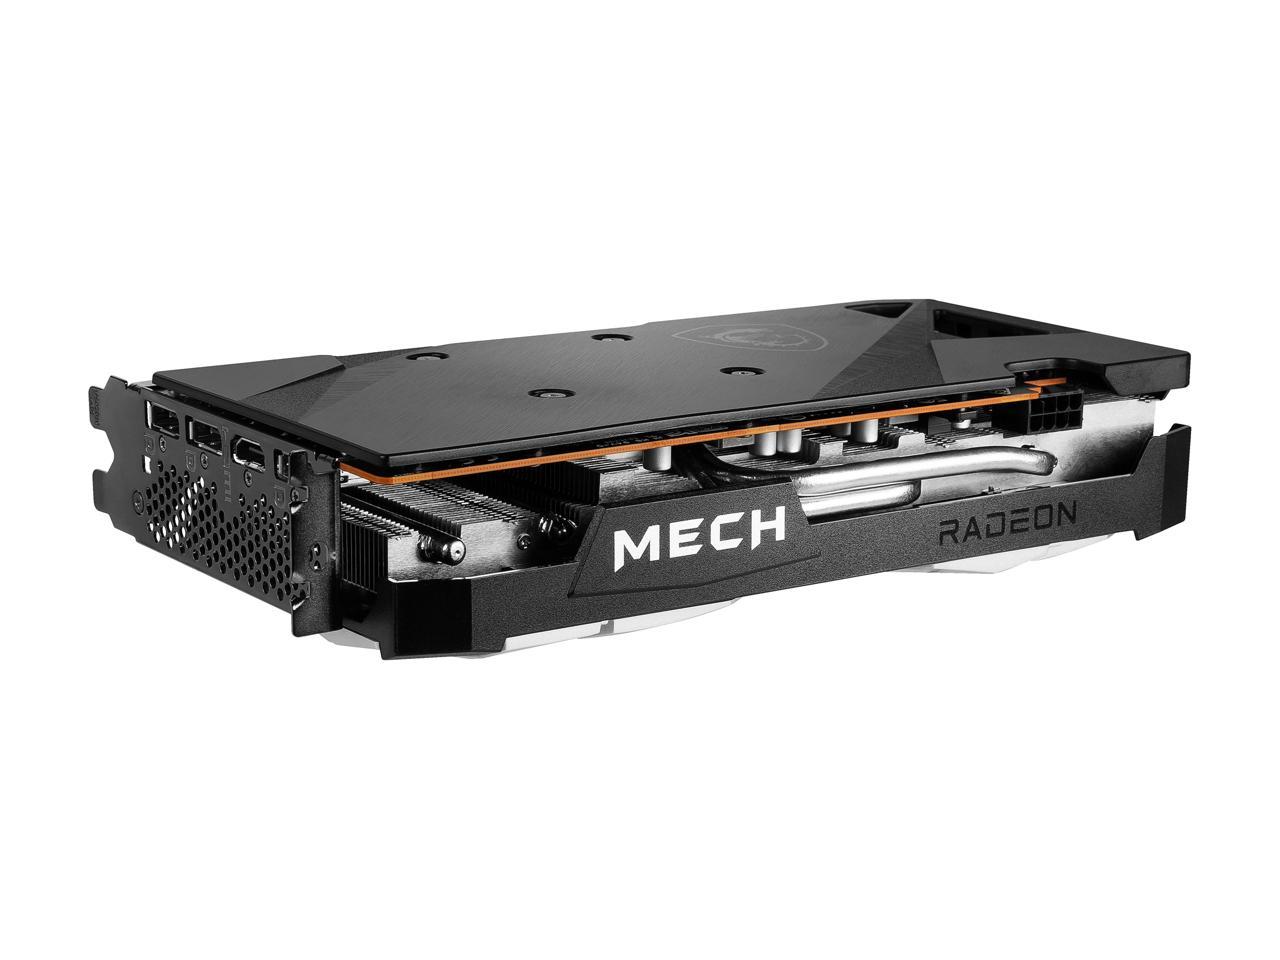 MSI Mech Radeon RX 6600 8GB PCI Express 4.0 Video Card RX 6600 MECH 2X 8G